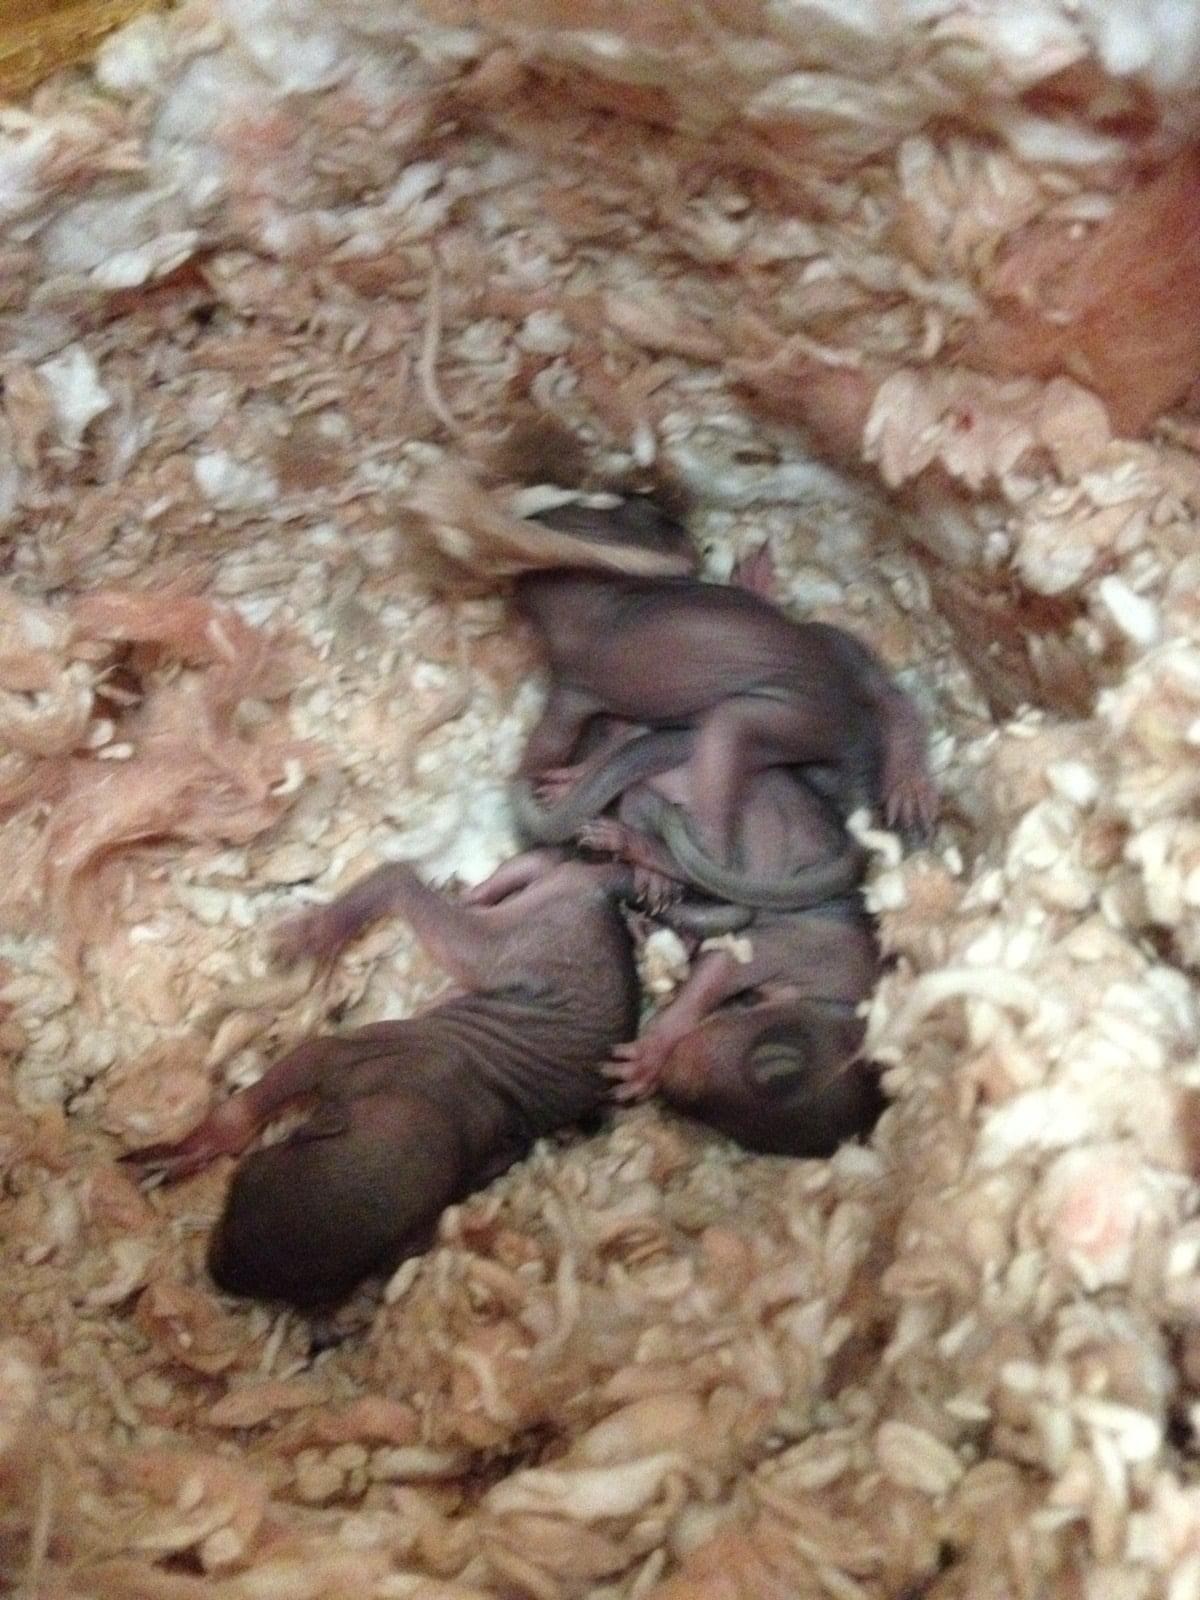 image of baby squirrels in attic insulation nest